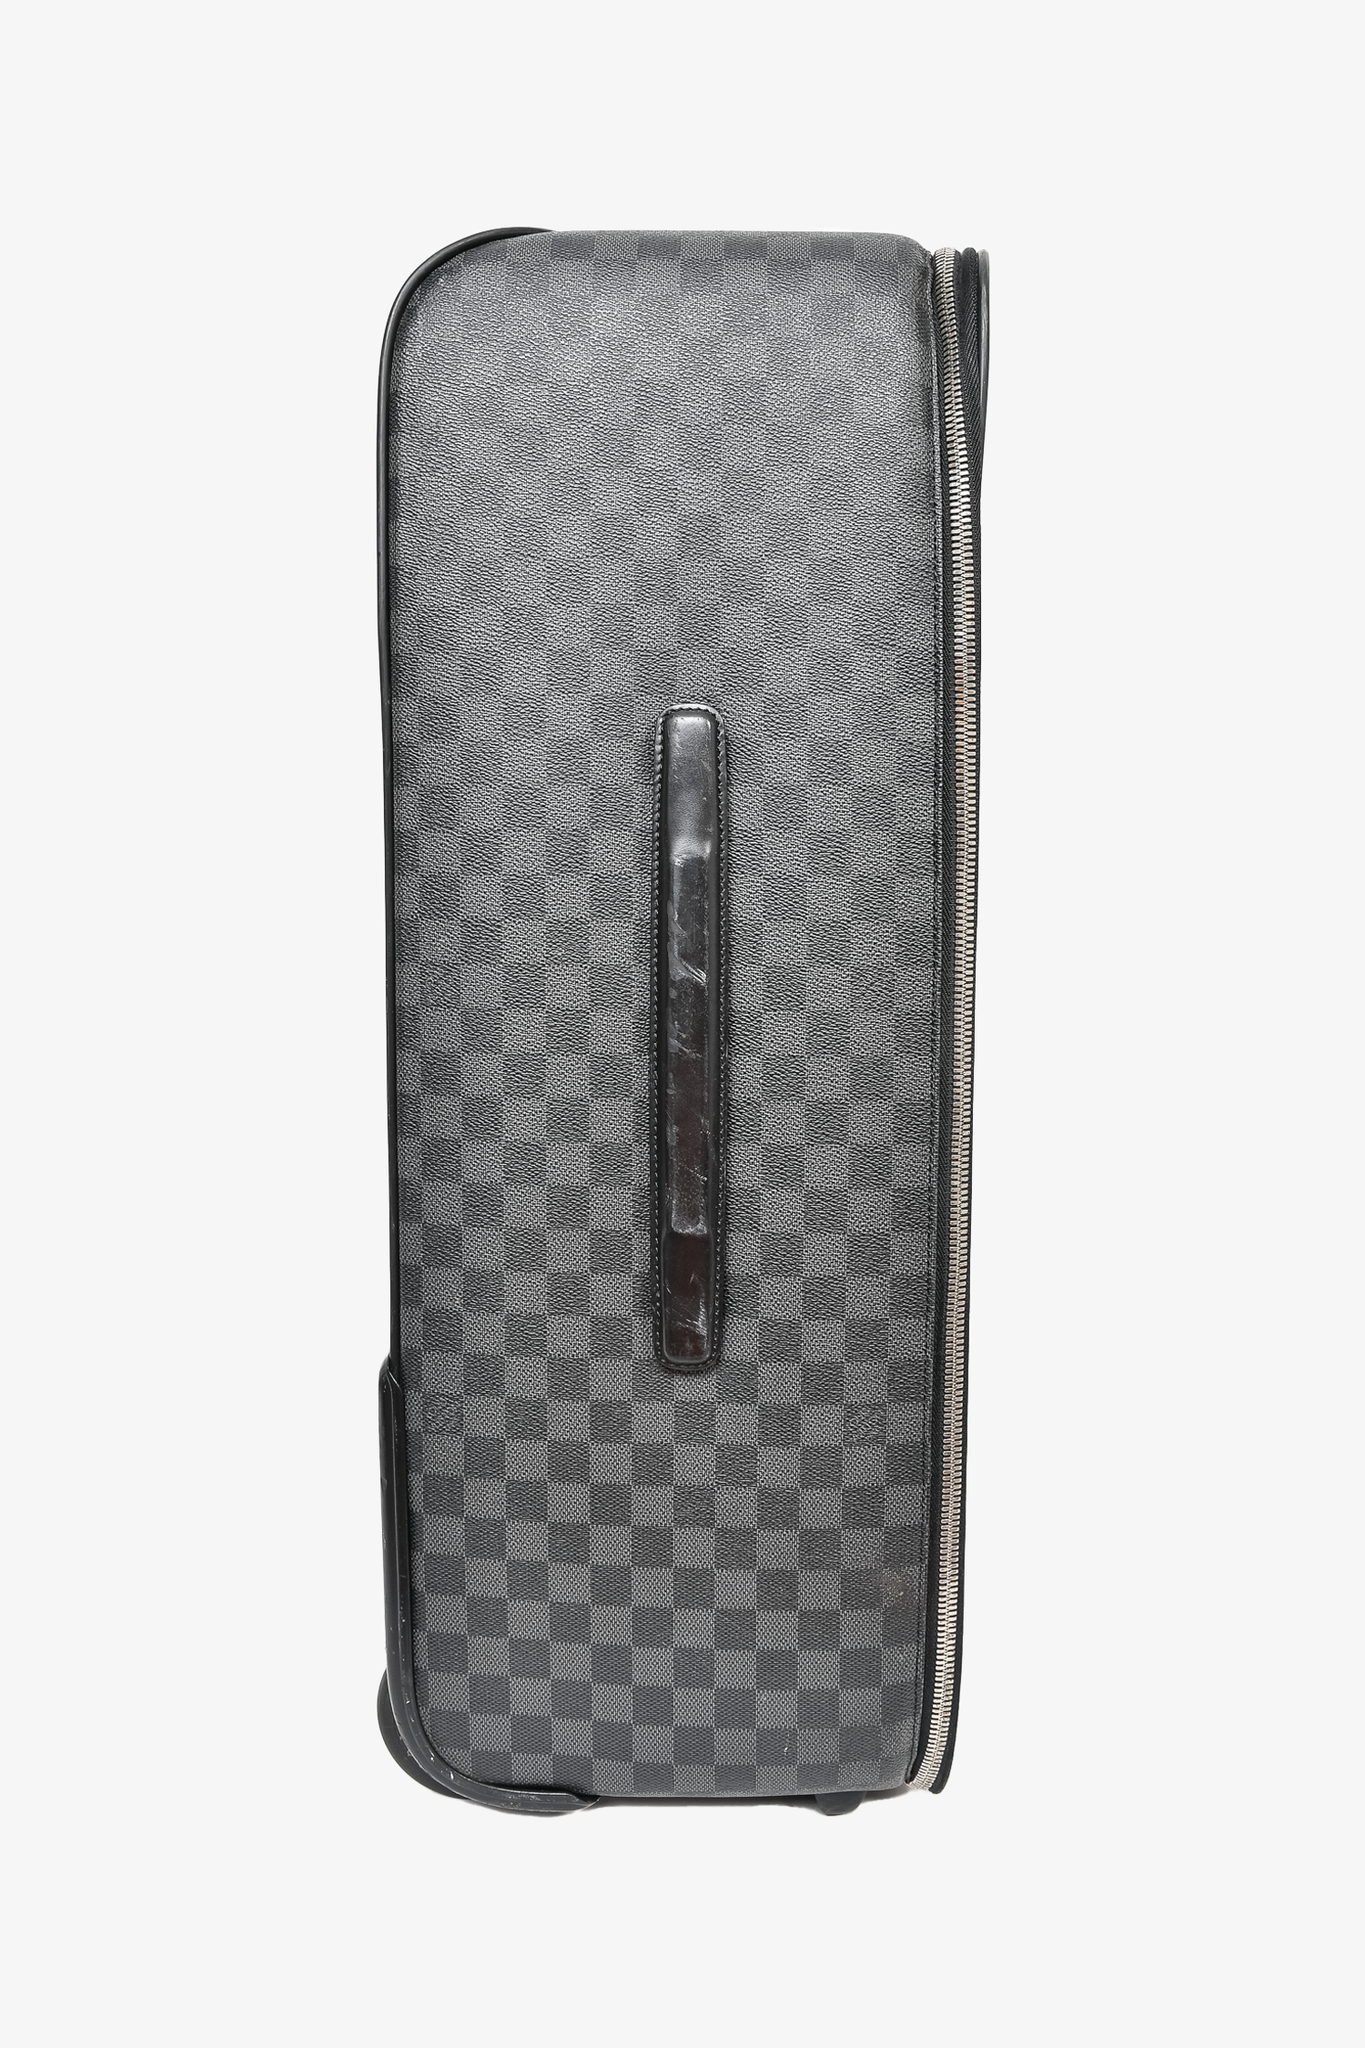 Louis Vuitton Damier Graphite Pegase 65 - Grey Suitcases, Luggage